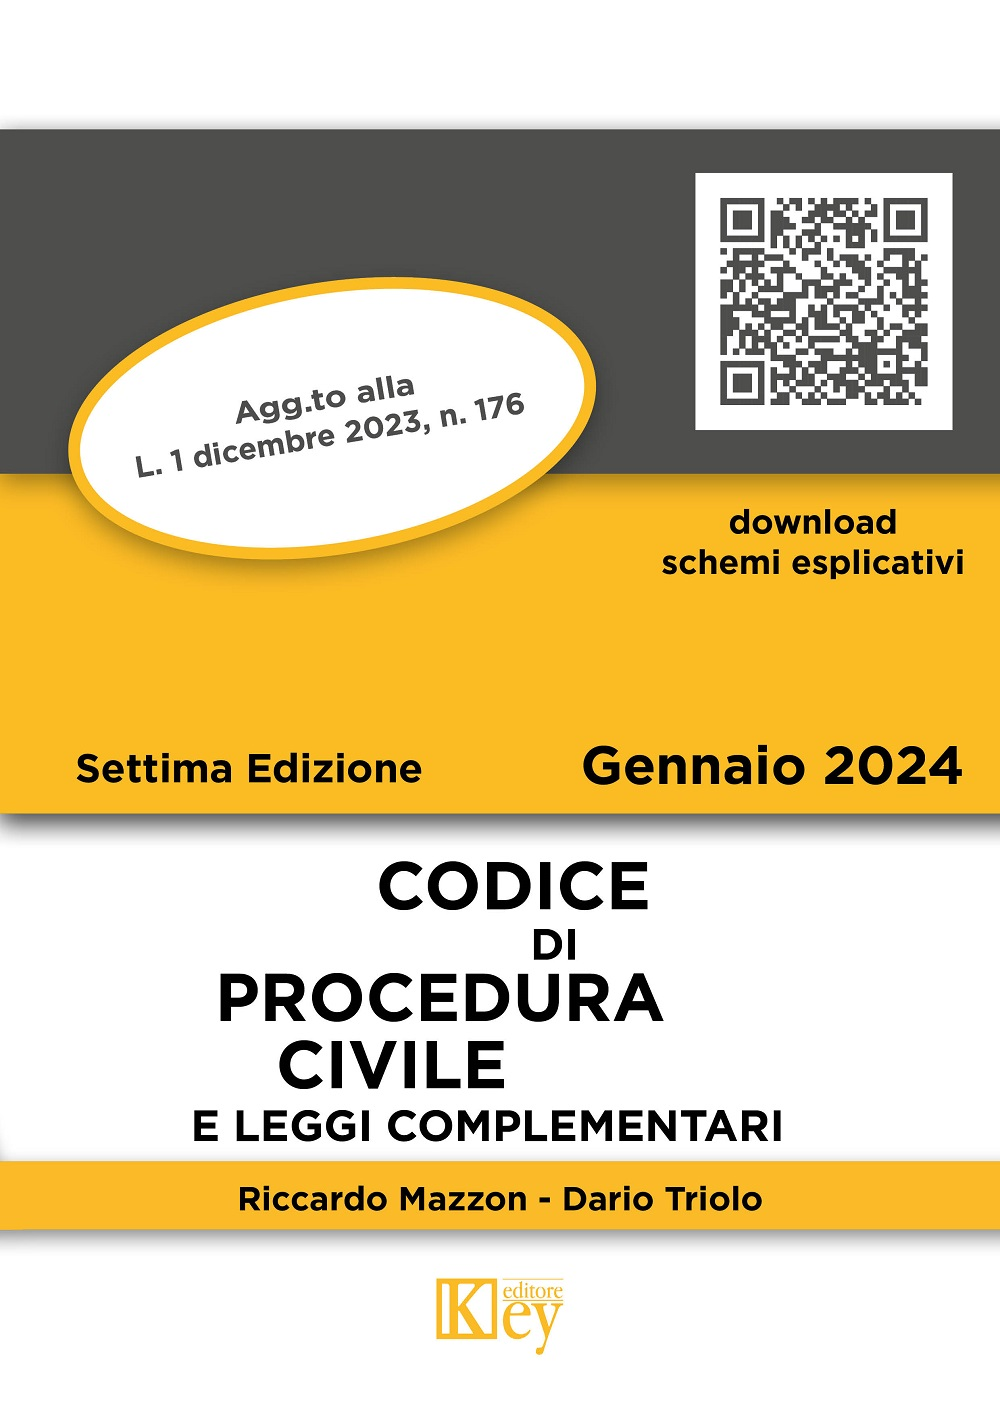 Codice civile 2024. Ediz. minor - - Libro - Mondadori Store